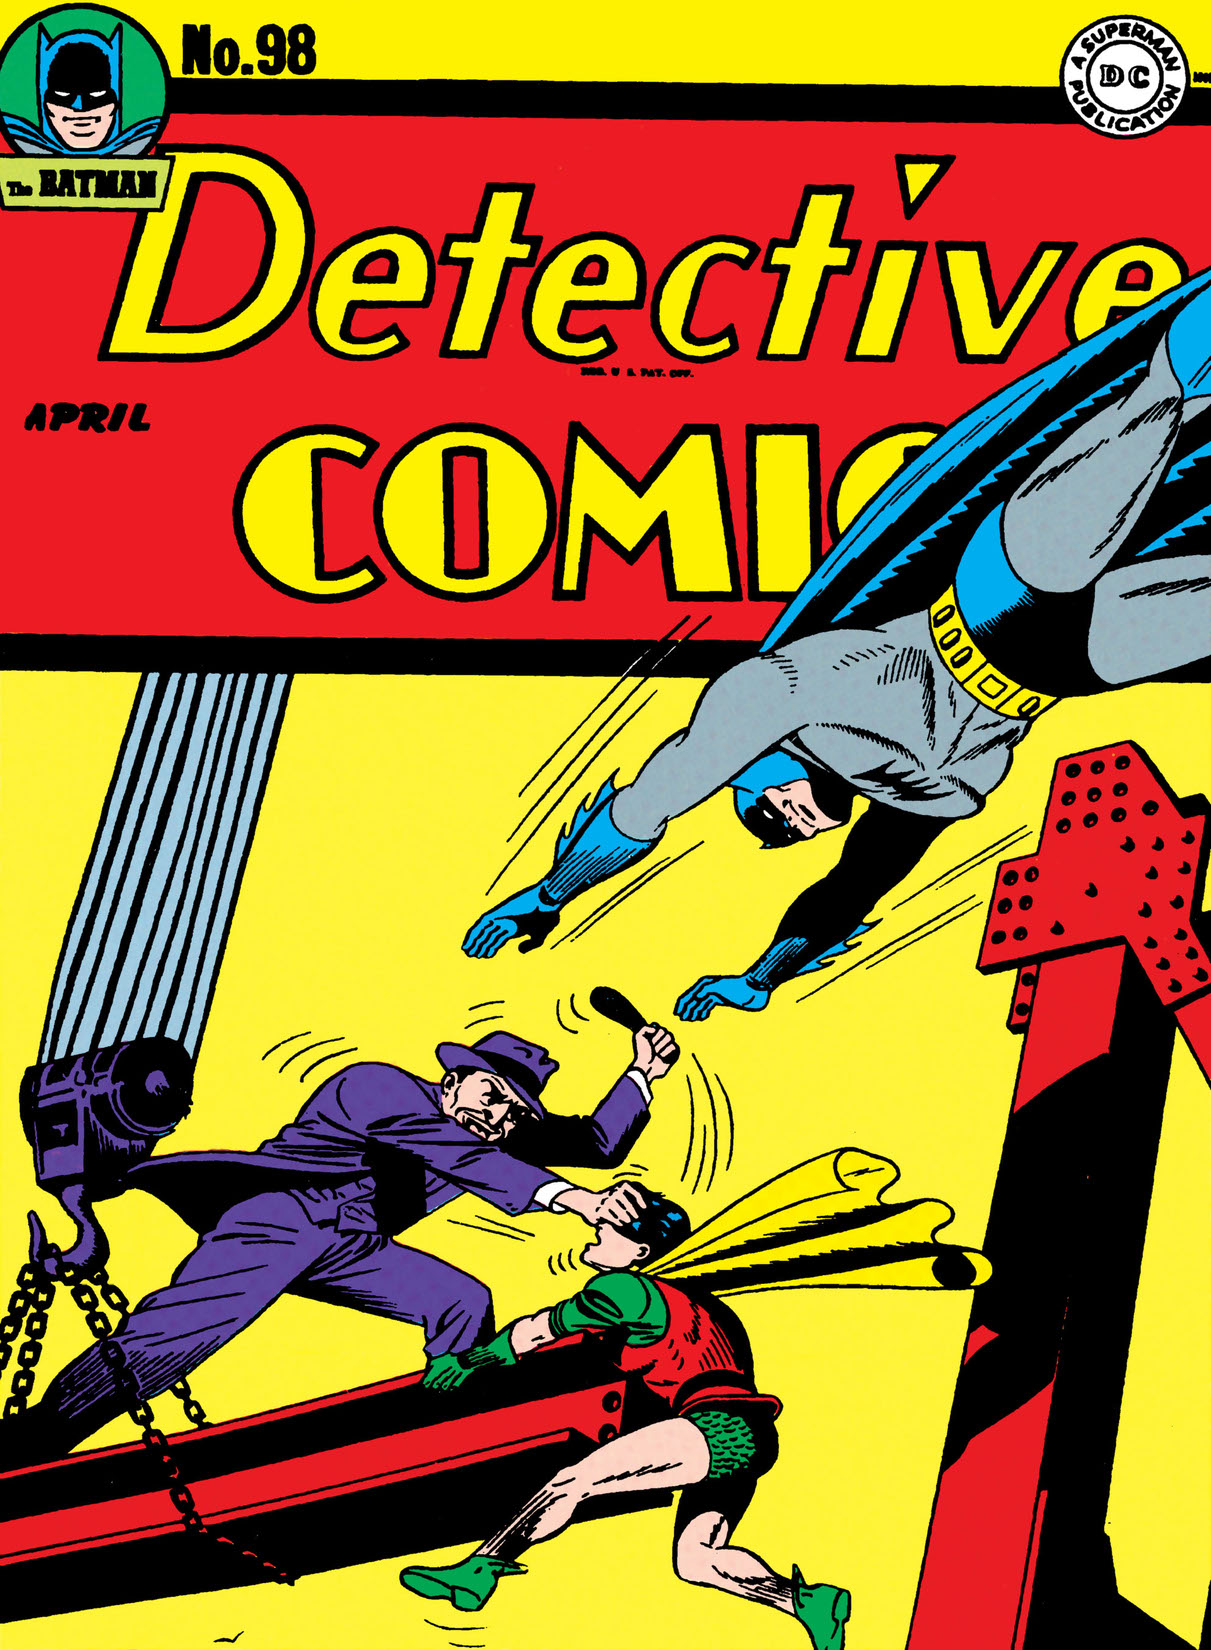 Detective Comics (1937-) #98 preview images